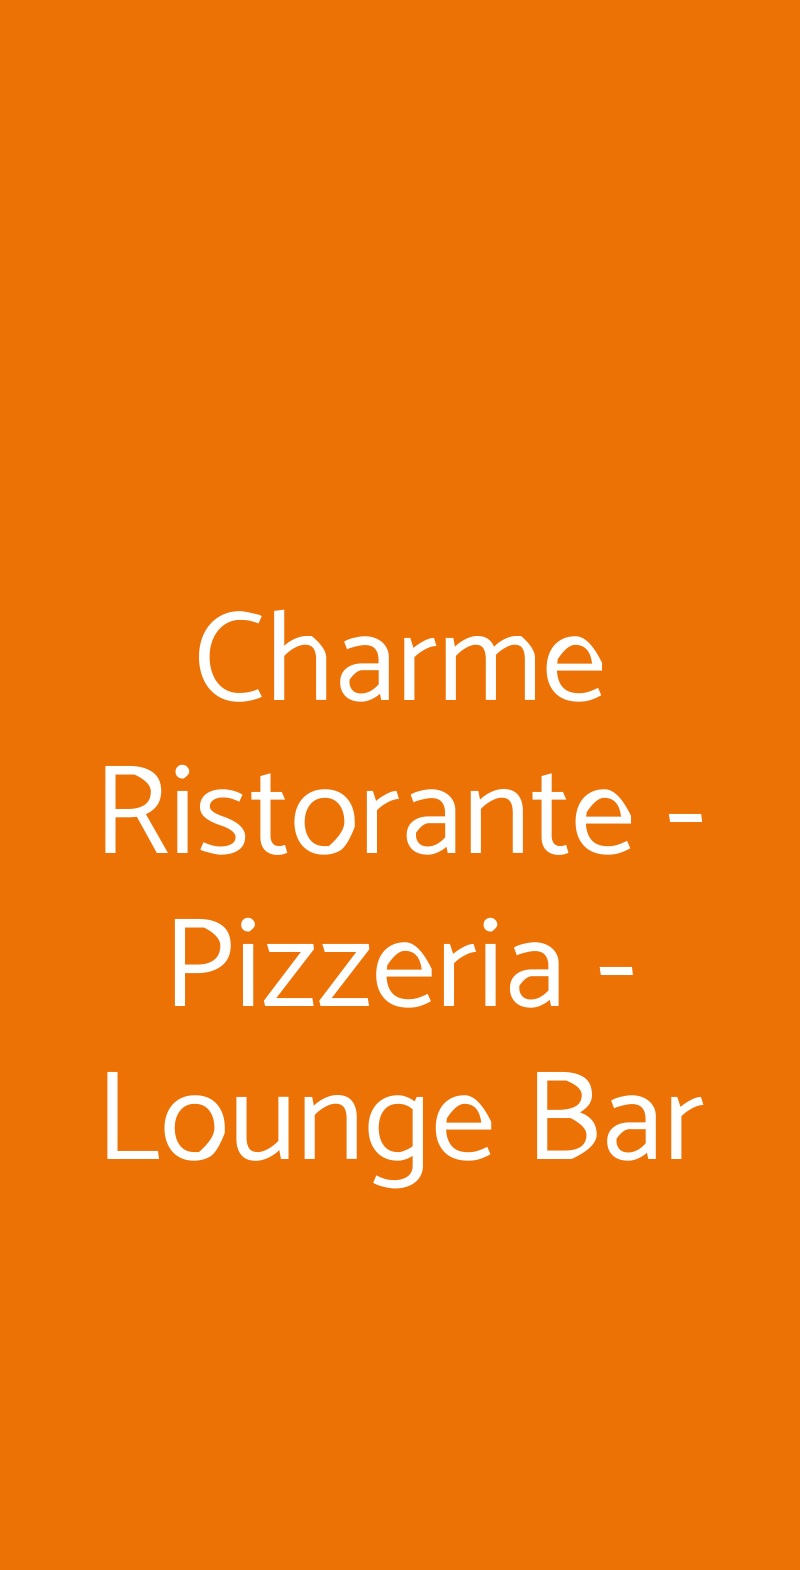 Charme Ristorante - Pizzeria - Lounge Bar Limbiate menù 1 pagina